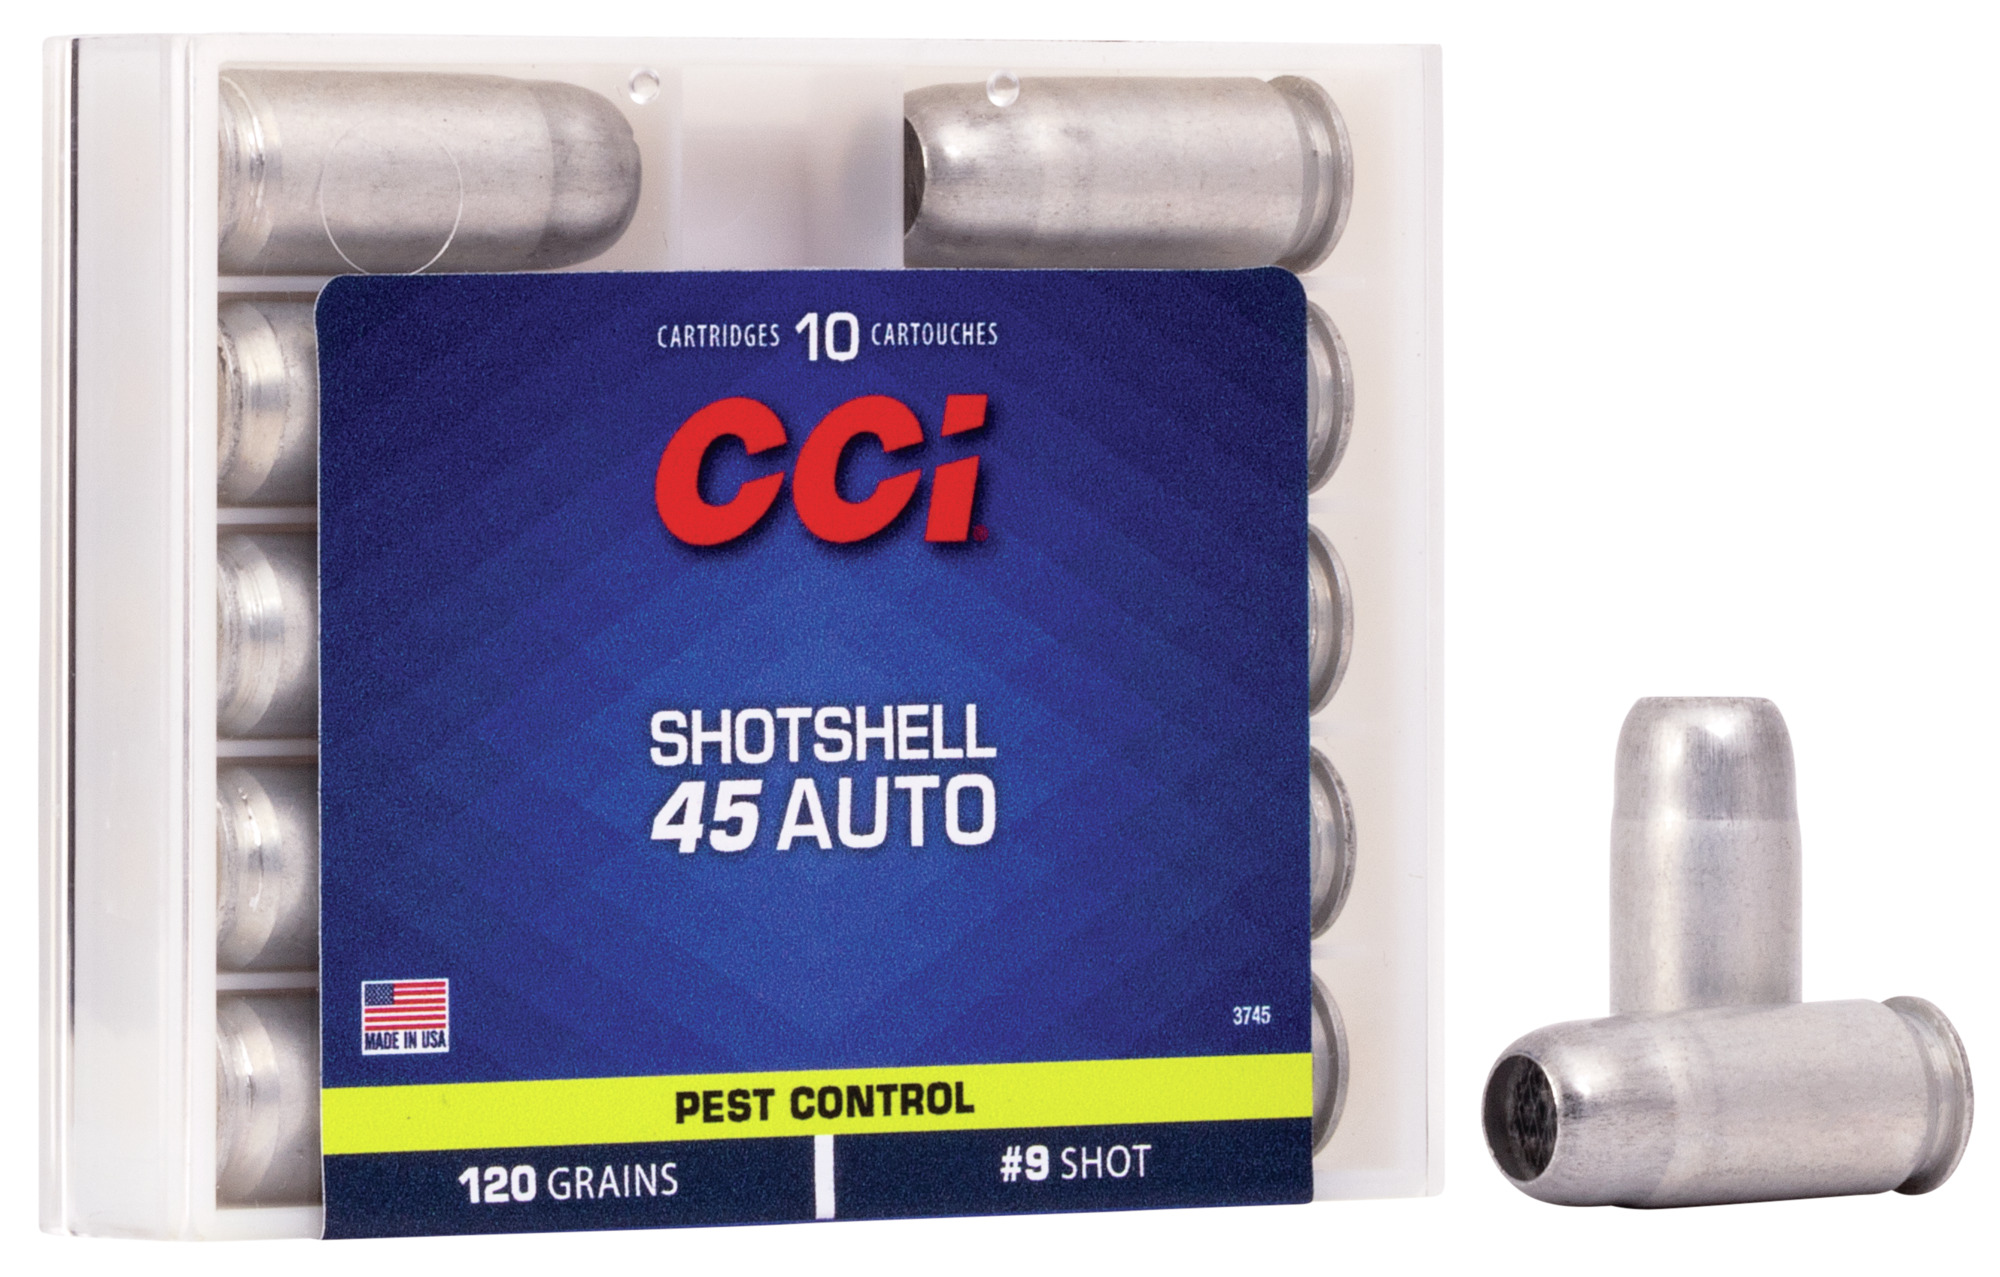 buy-pest-control-shotshell-for-usd-25-99-cci